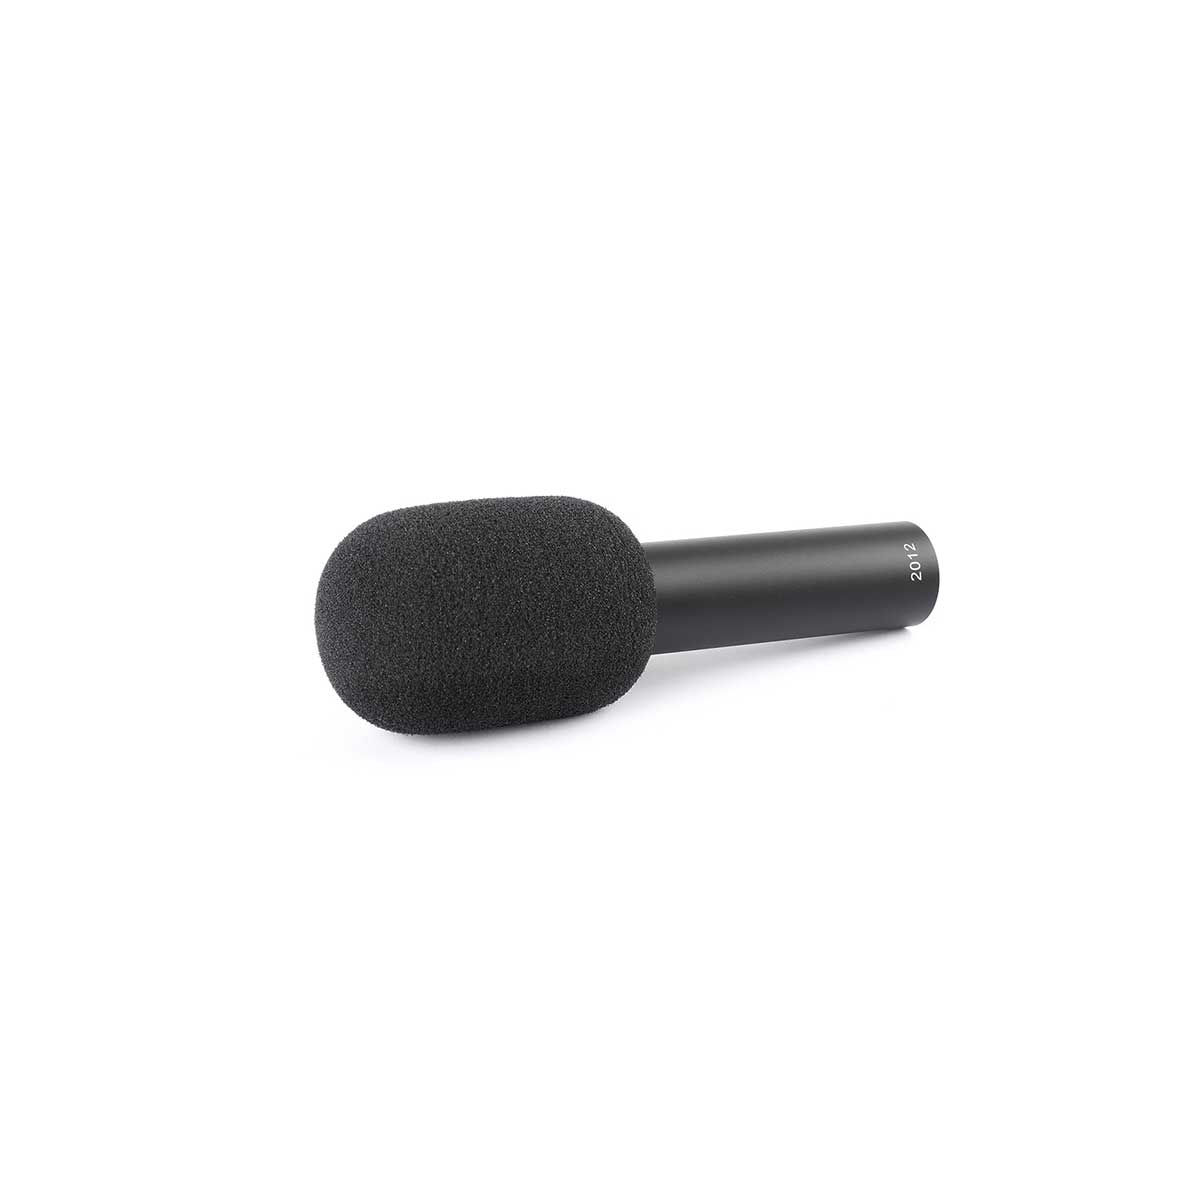 DPA 2012 Compact Cardioid Microphone